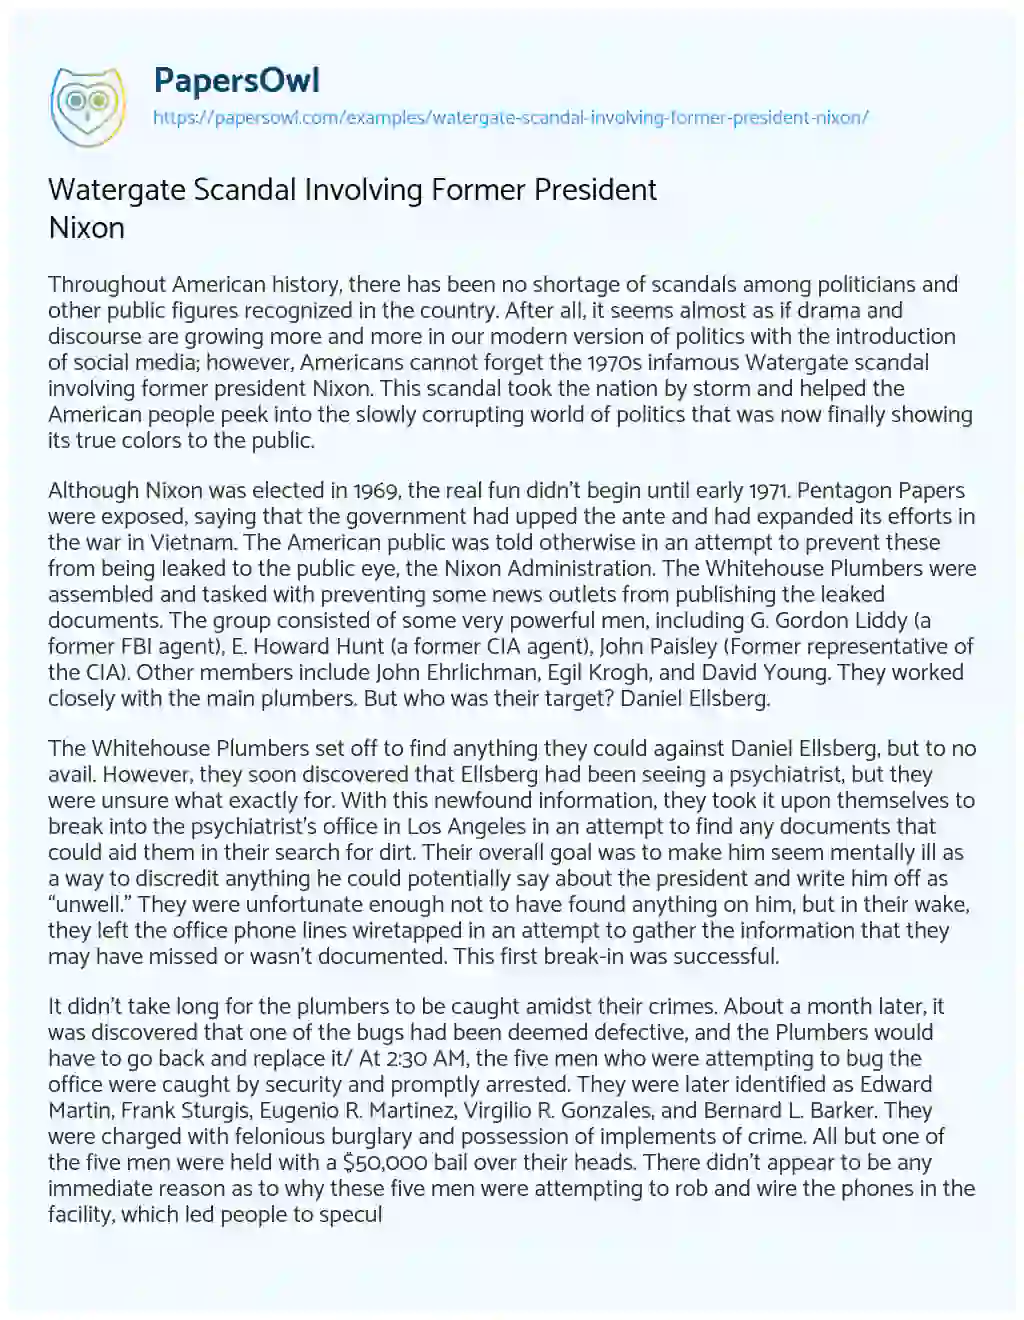 Essay on Watergate Scandal Involving Former President Nixon